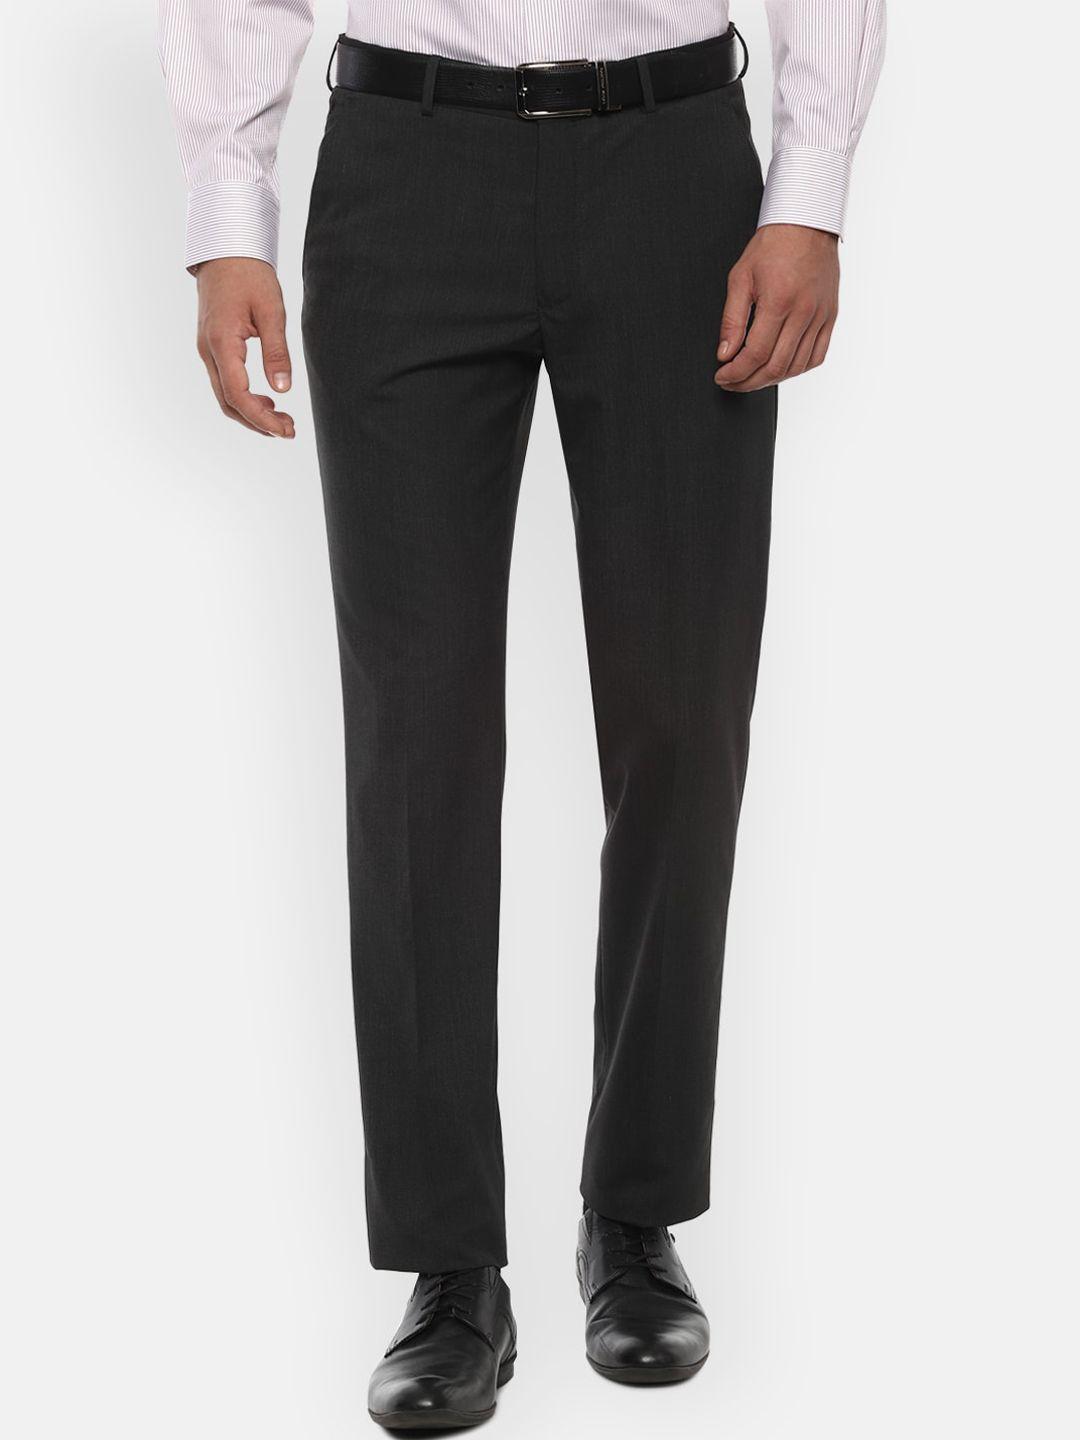 louis-philippe-men-black-slim-fit-formal-trousers